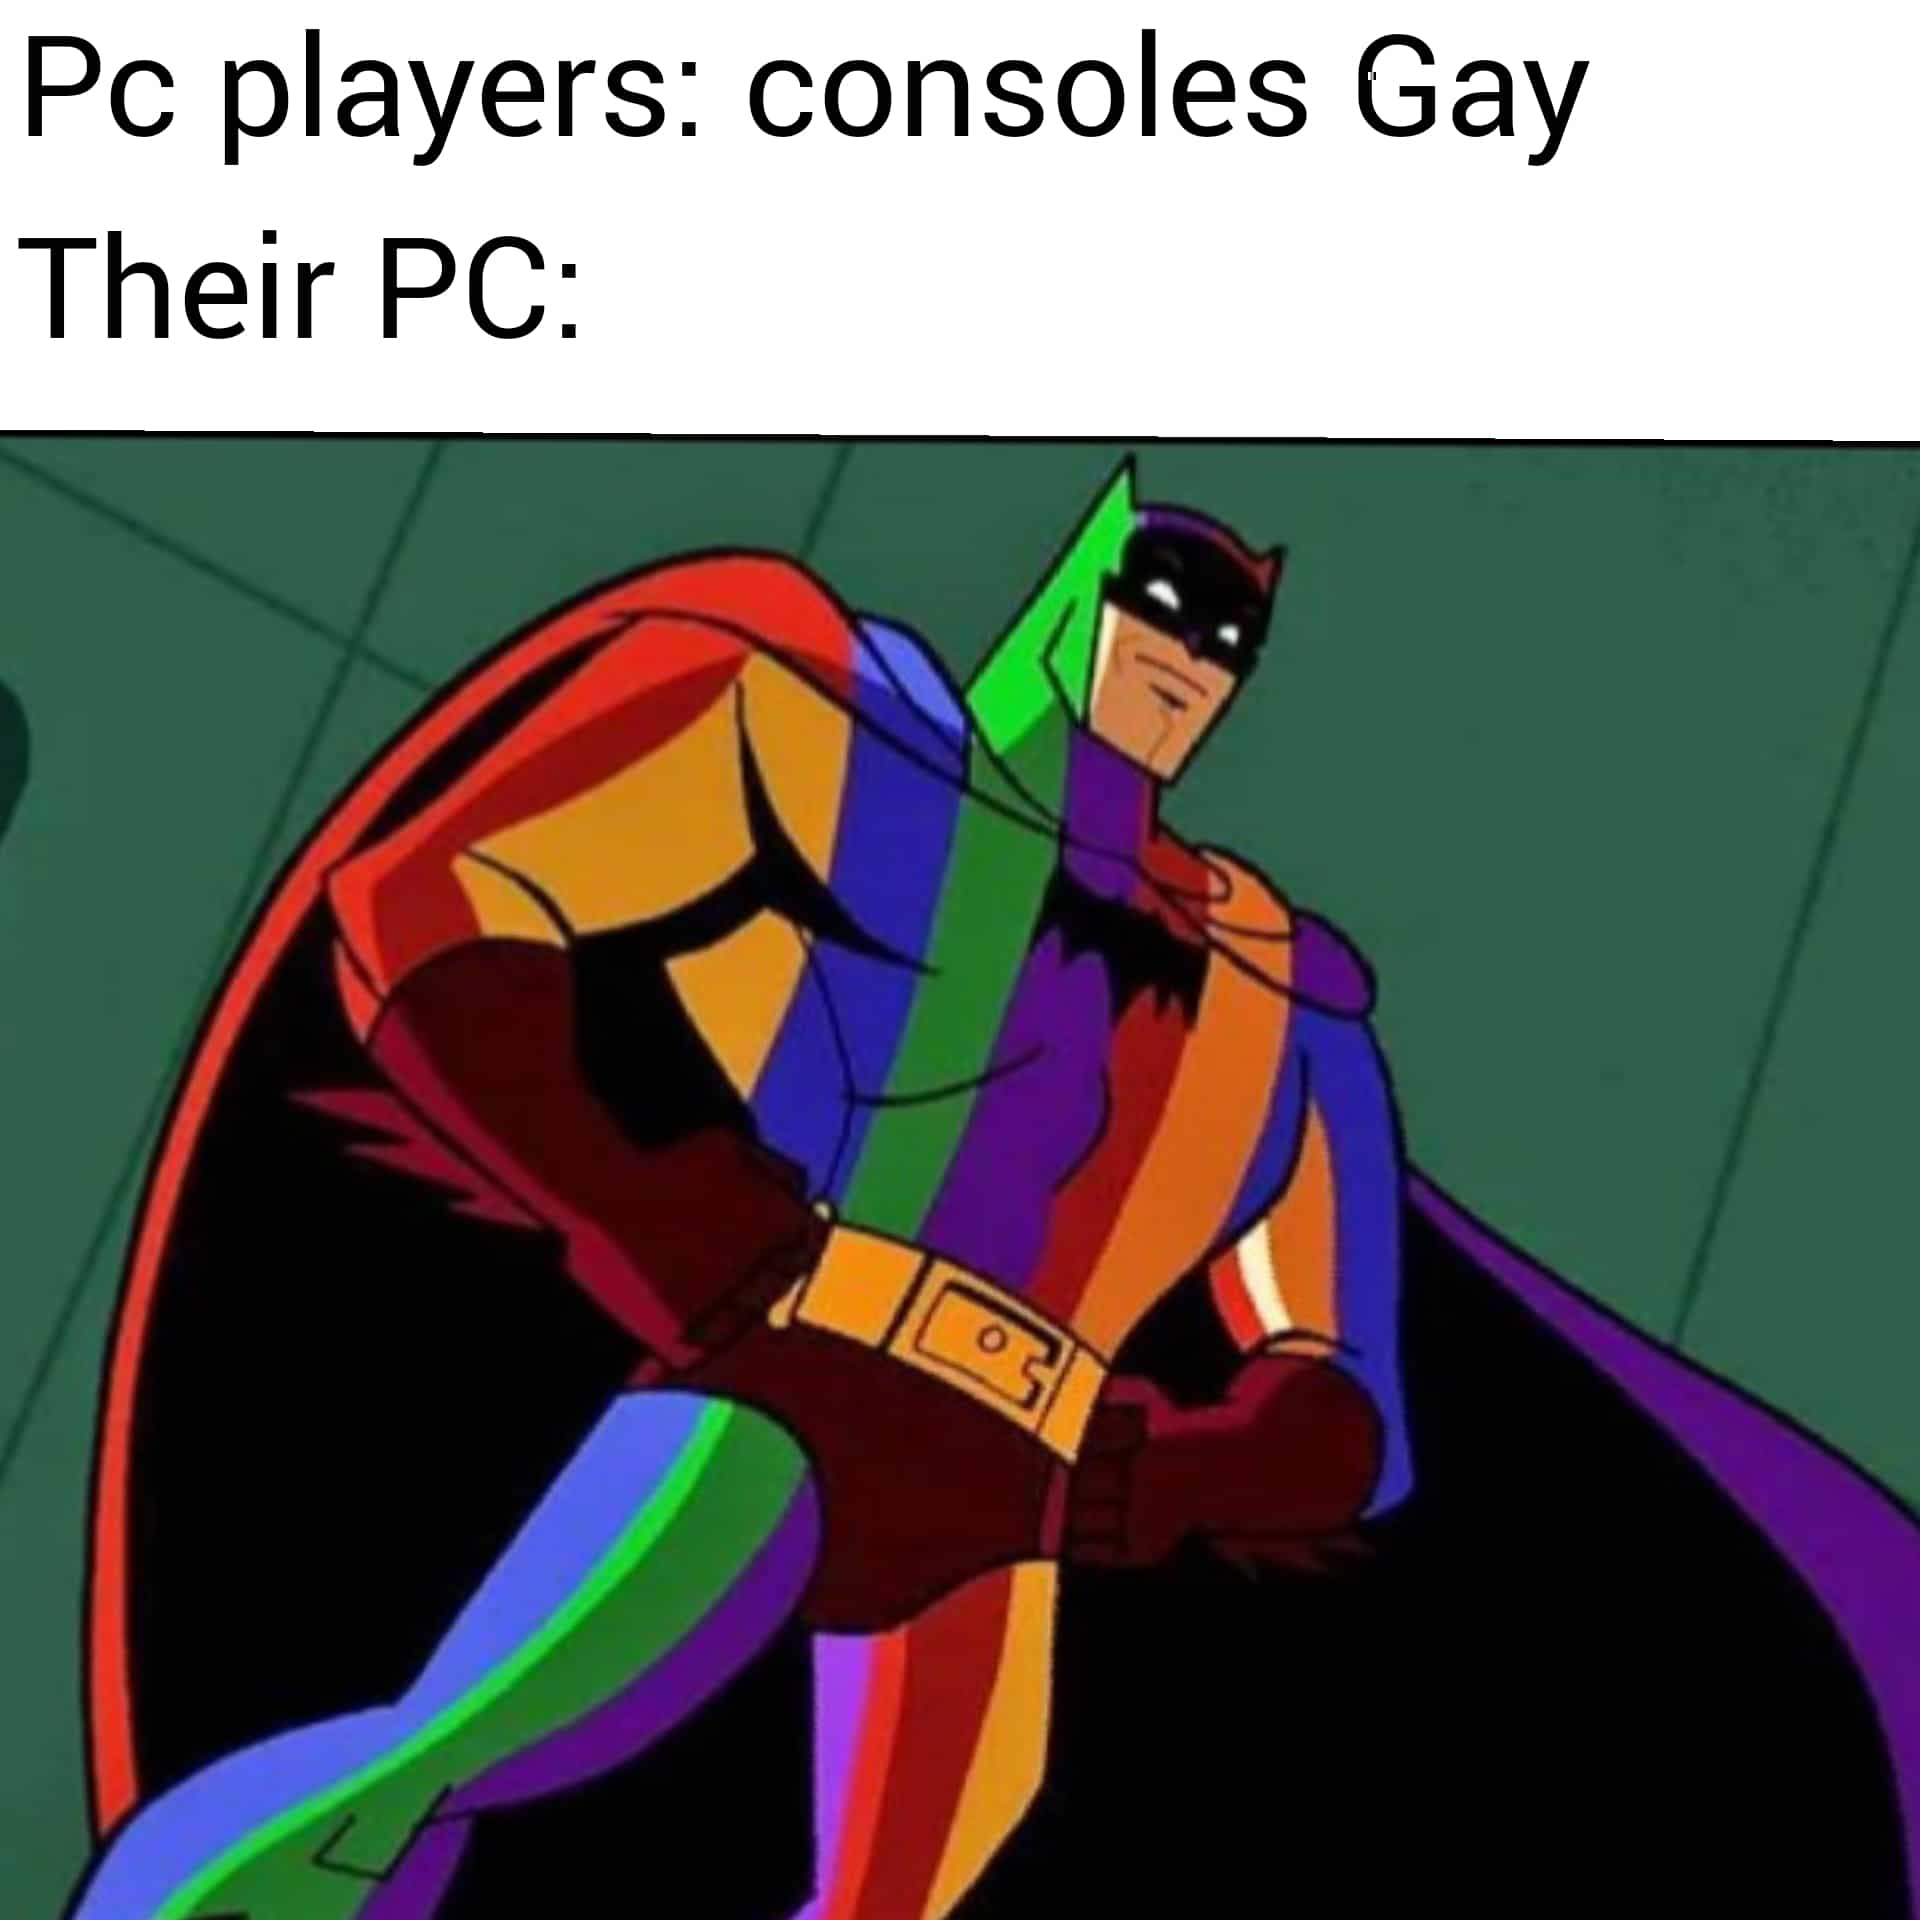 Dank, RGB, PC, GPU, Gay, FPS Dank Memes Dank, RGB, PC, GPU, Gay, FPS text: Pc players: consoles Gay Their PC: 